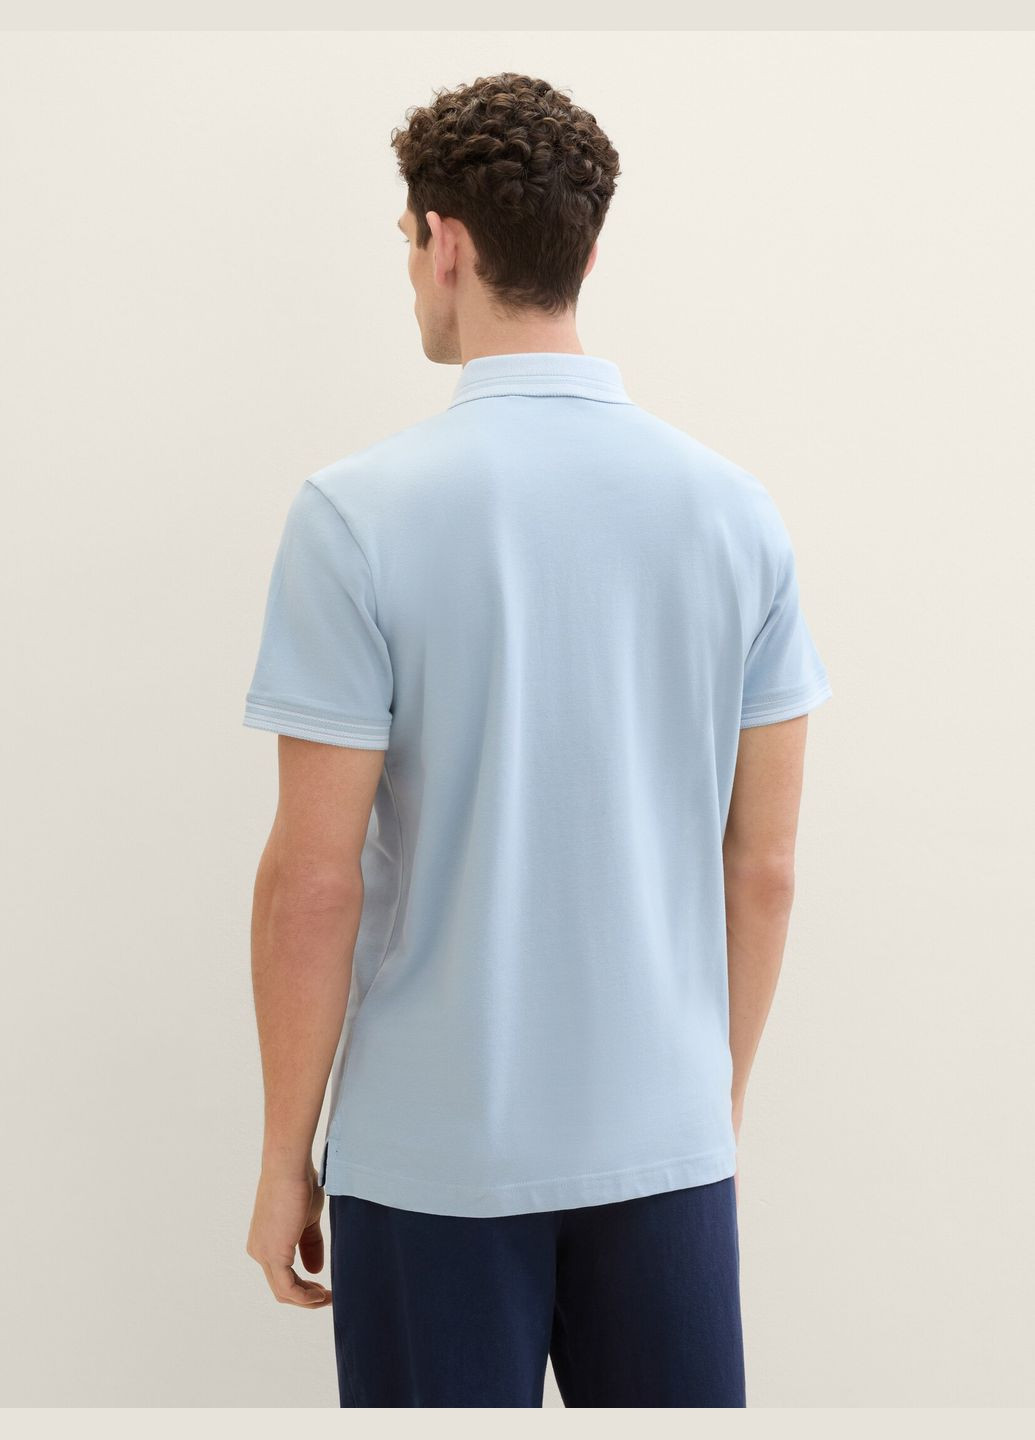 Голубой футболка-поло для мужчин Tom Tailor